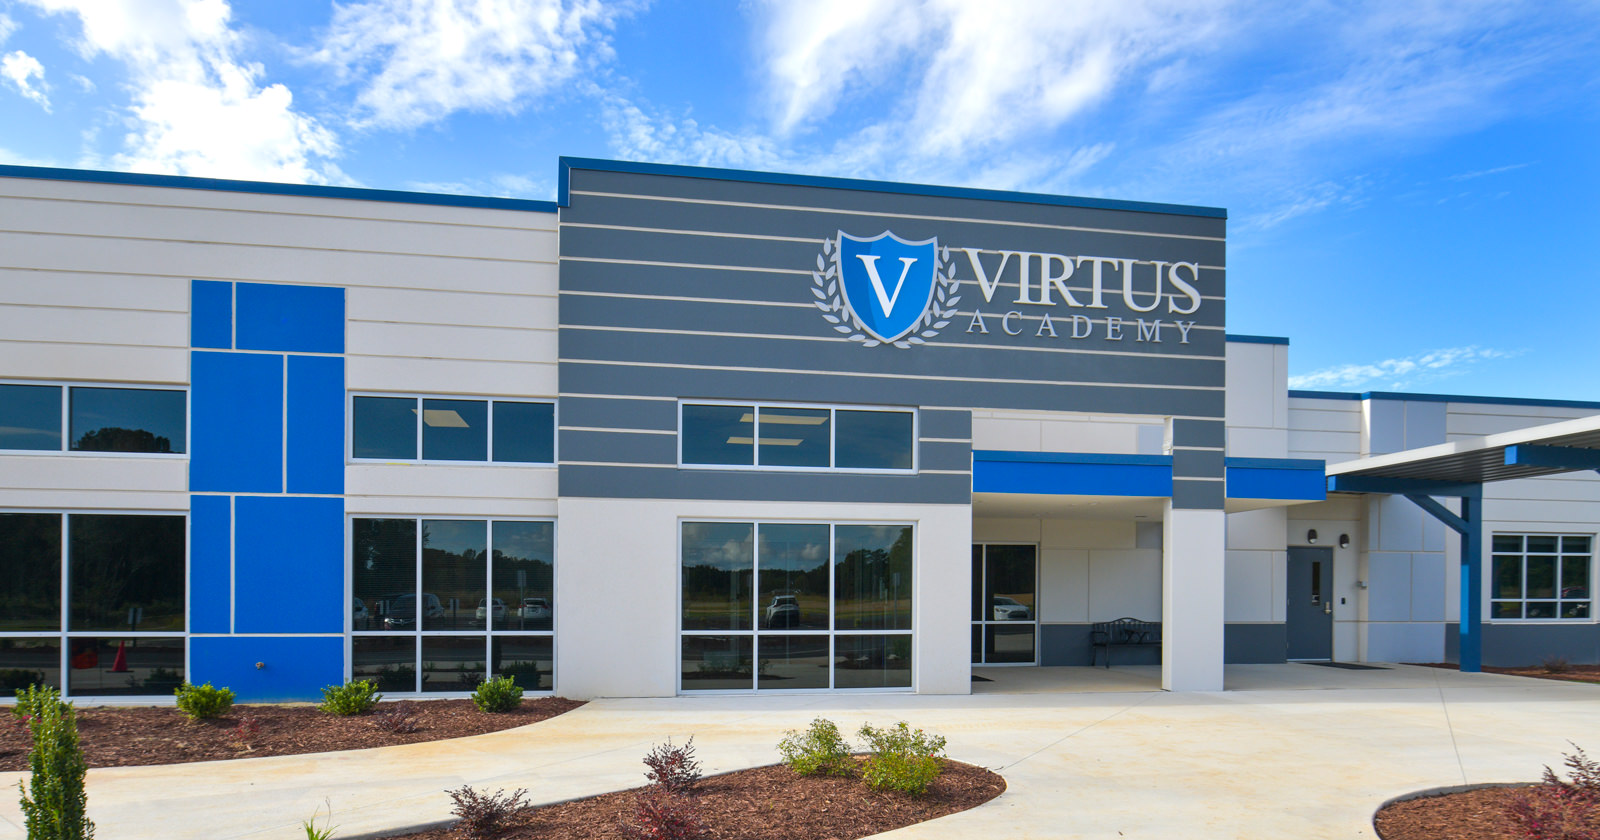 Virtus Academy